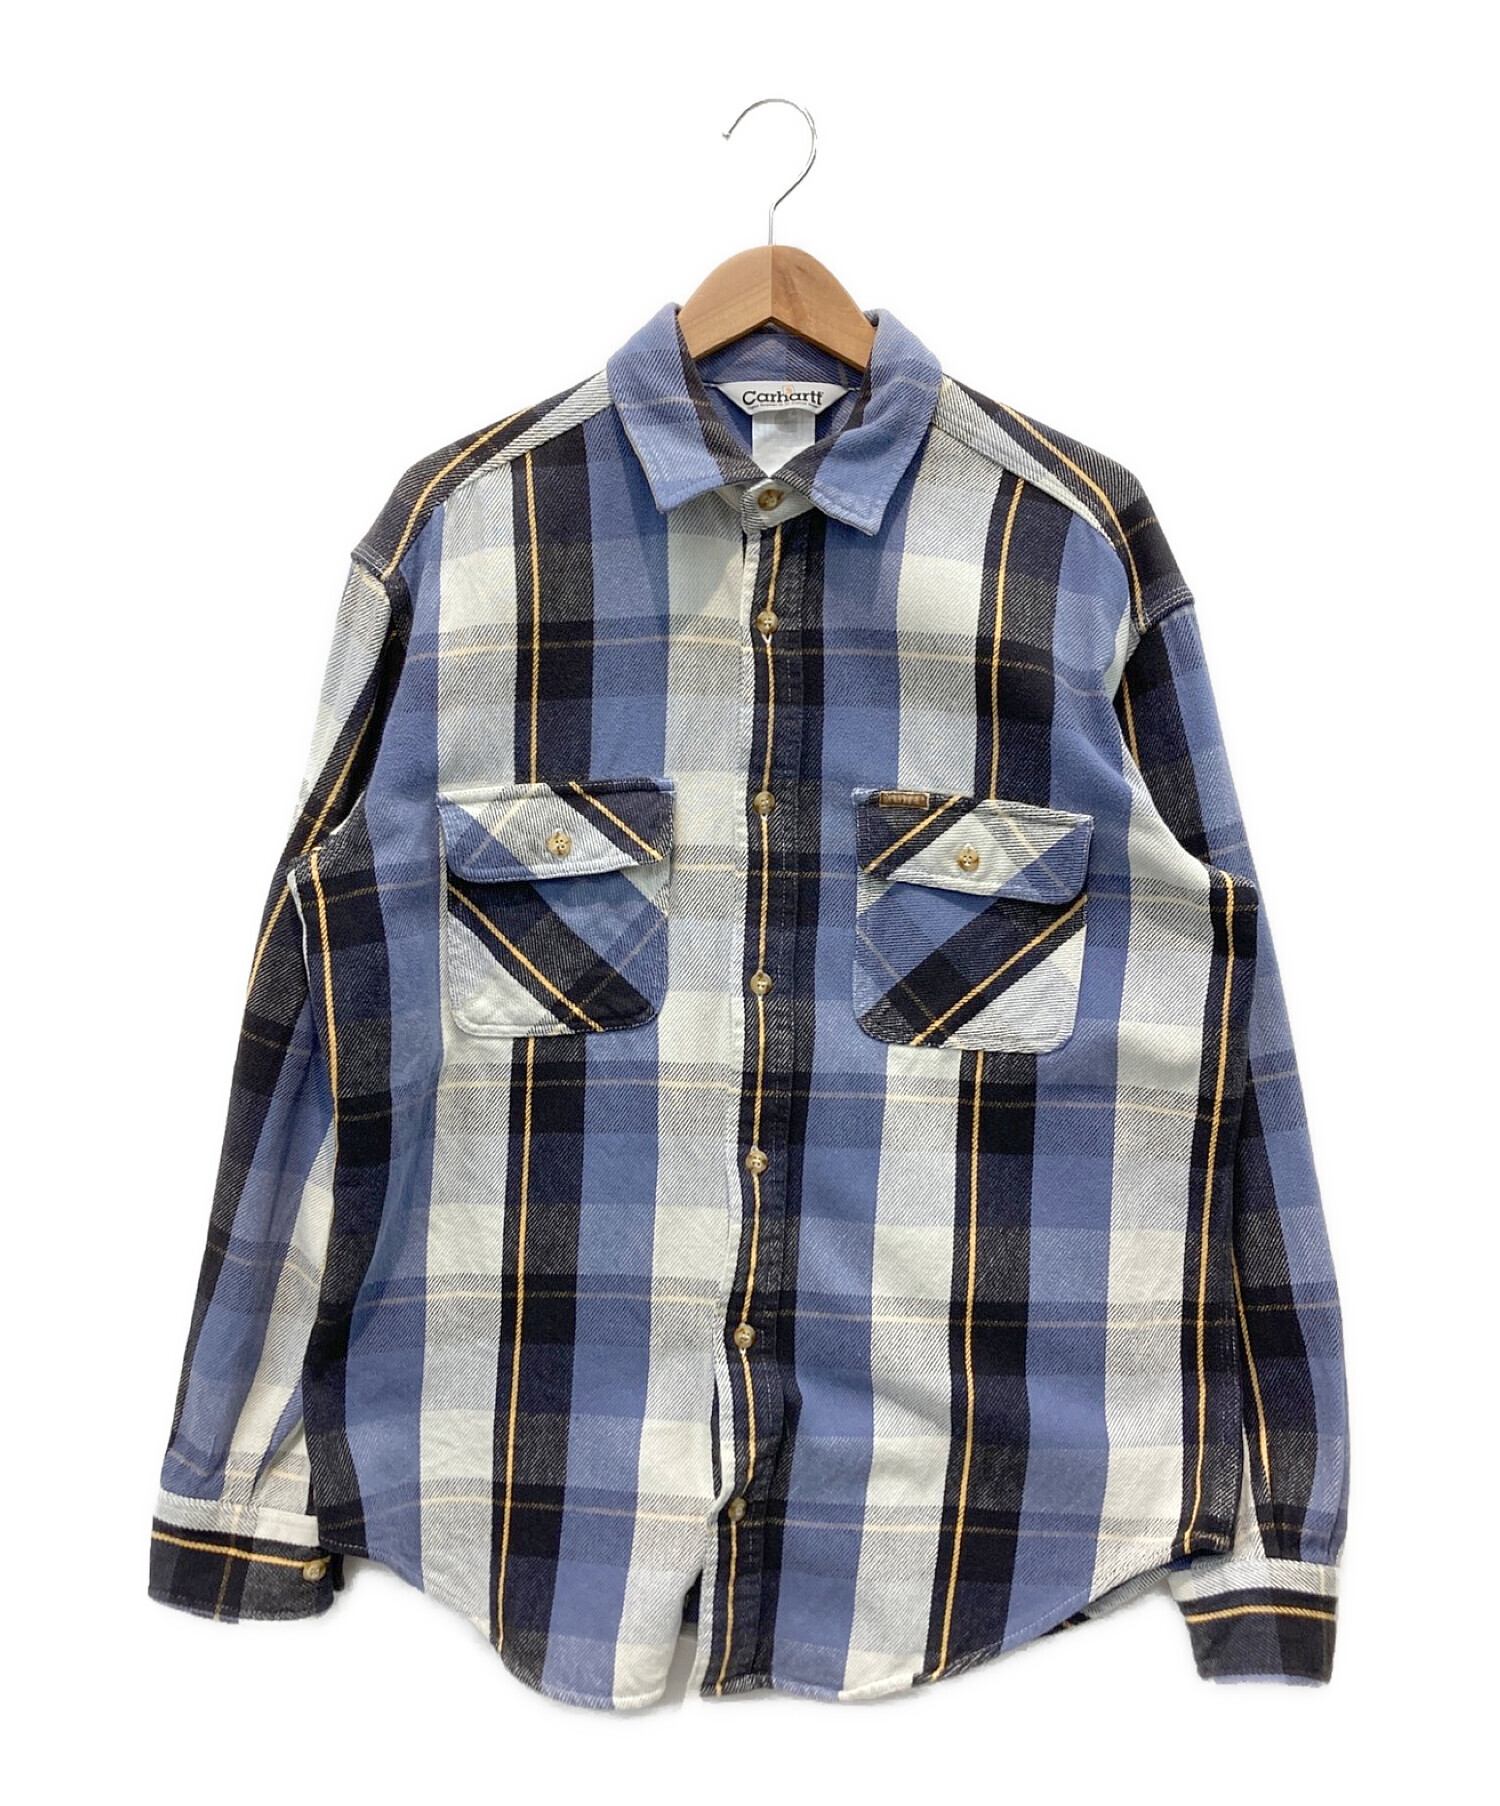 CarHartt (カーハート) チェックネルシャツ ブルー×ネイビー サイズ:XL